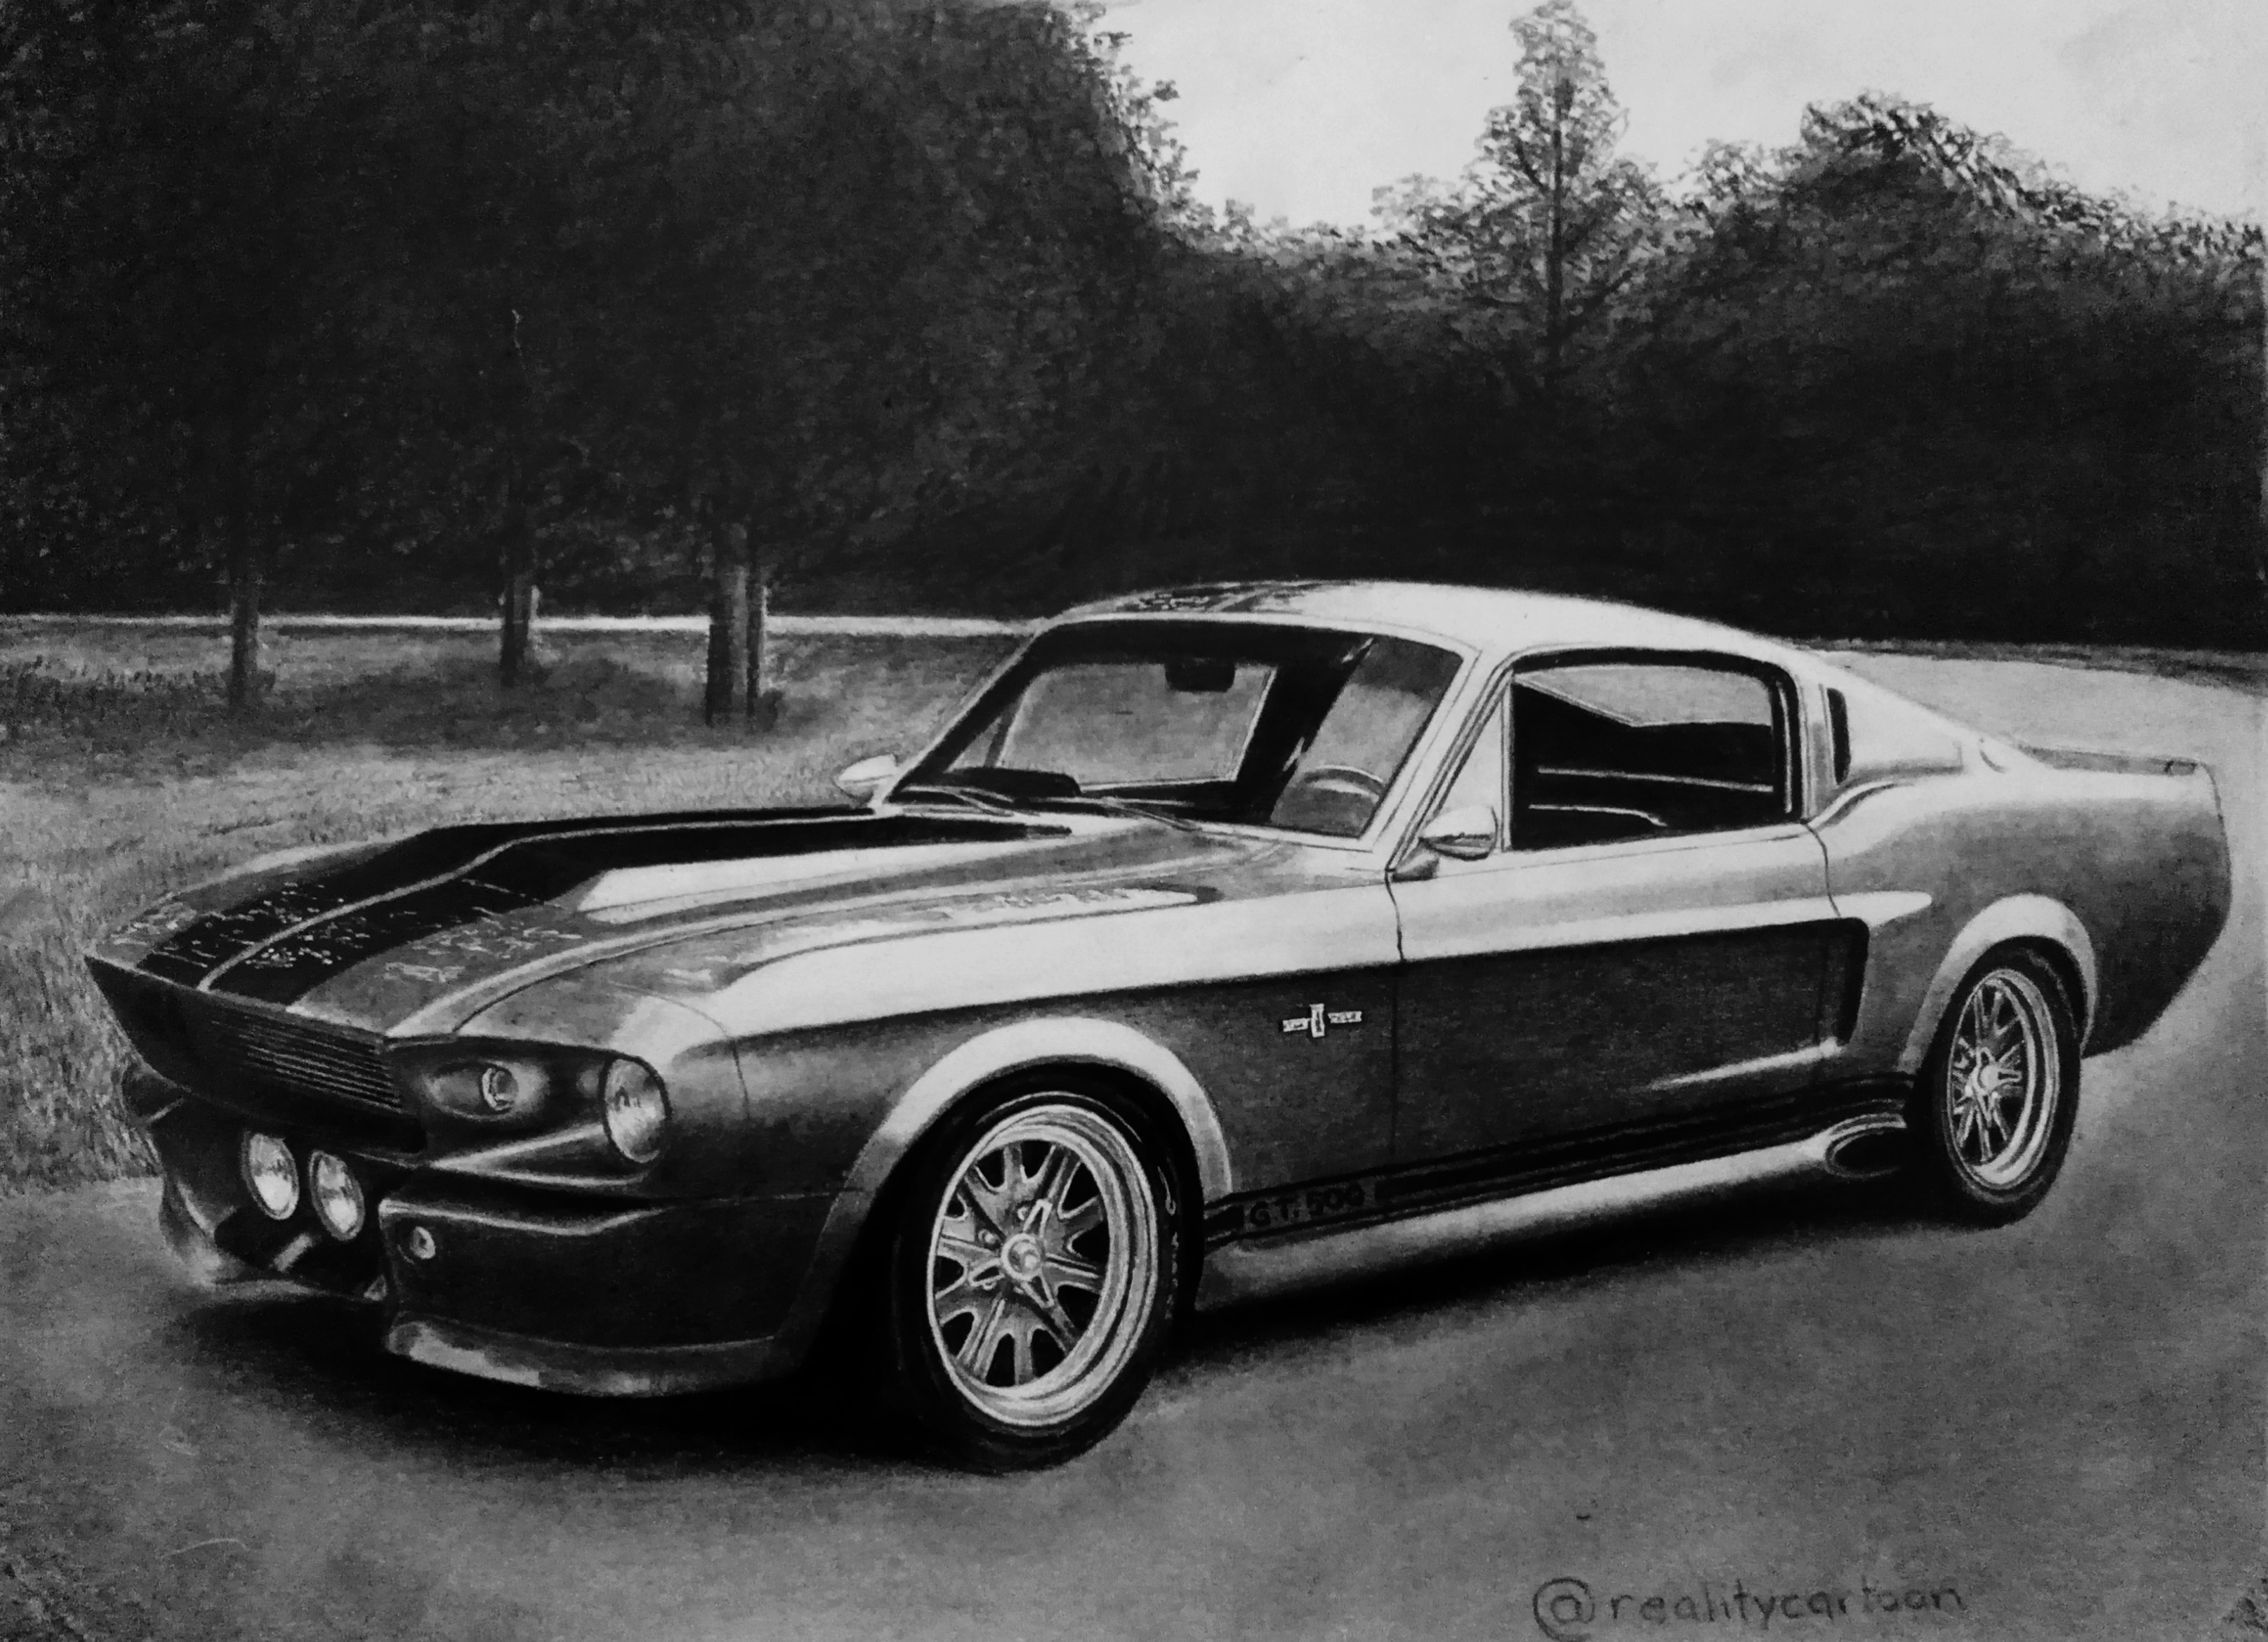 Mustang Shelby gt500 1967 vector